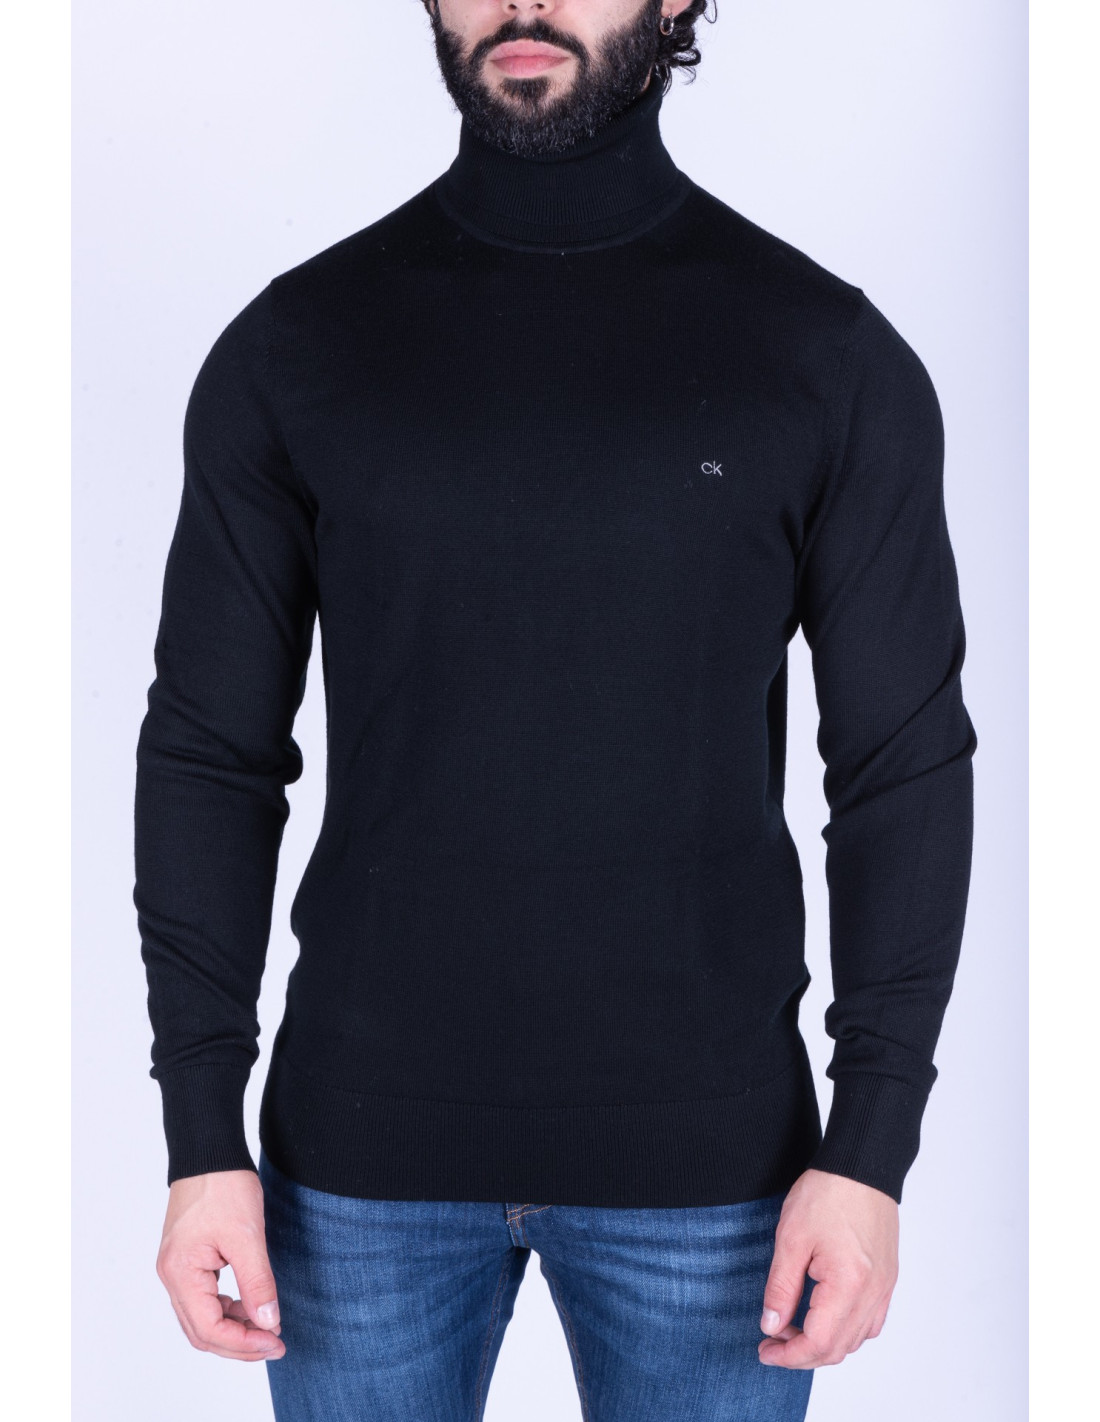 Black Superior Calvin Klein men\'s Color Taglia black Wool sweater XS